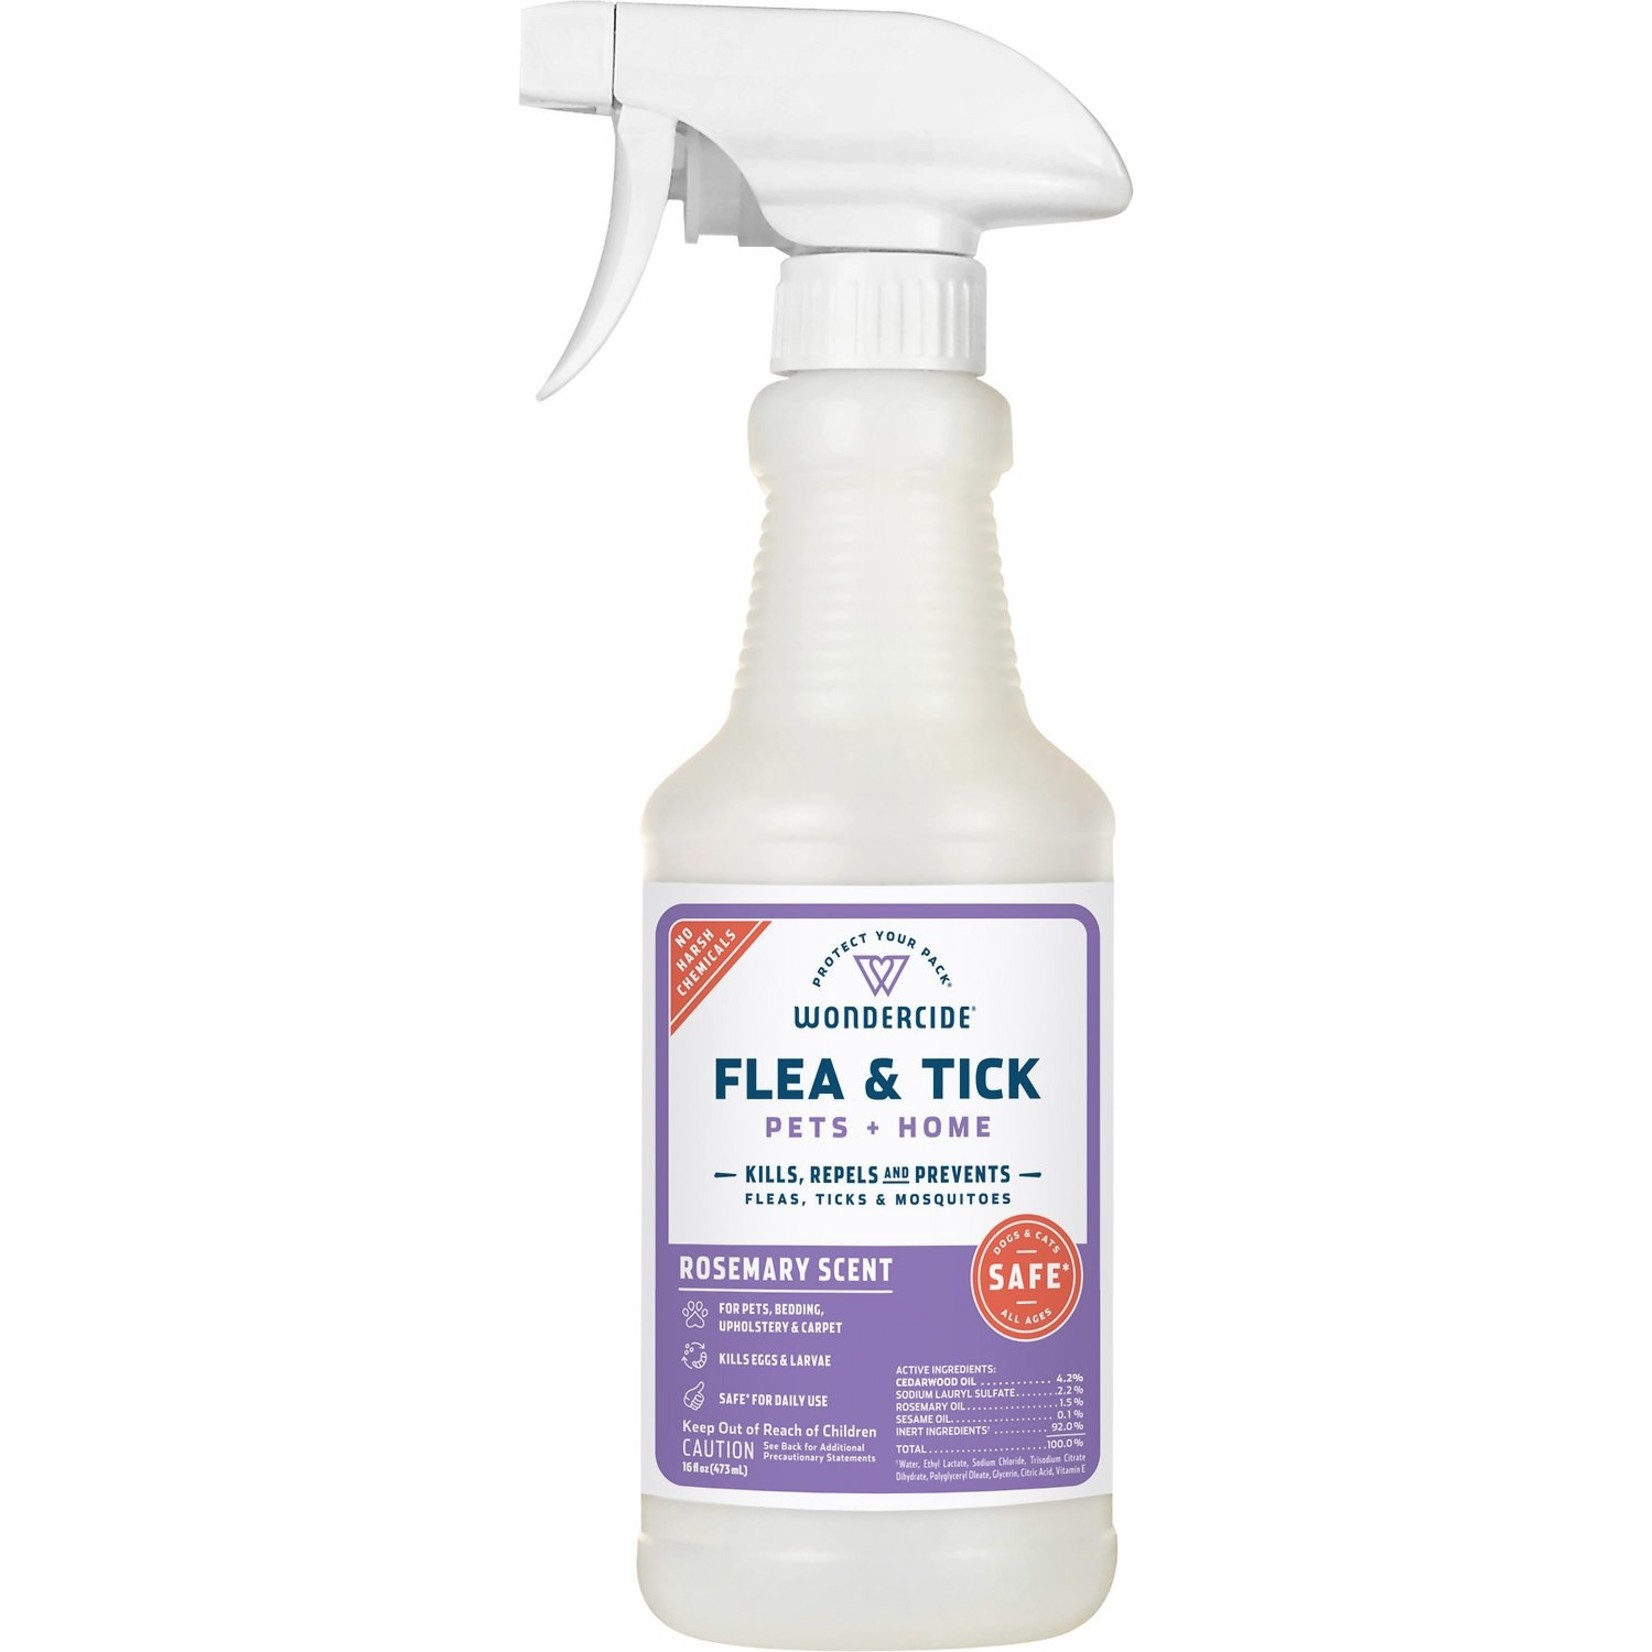 Wondercide Wondercide Flea & Tick Spray for Pets + Home - Rosemary Scent